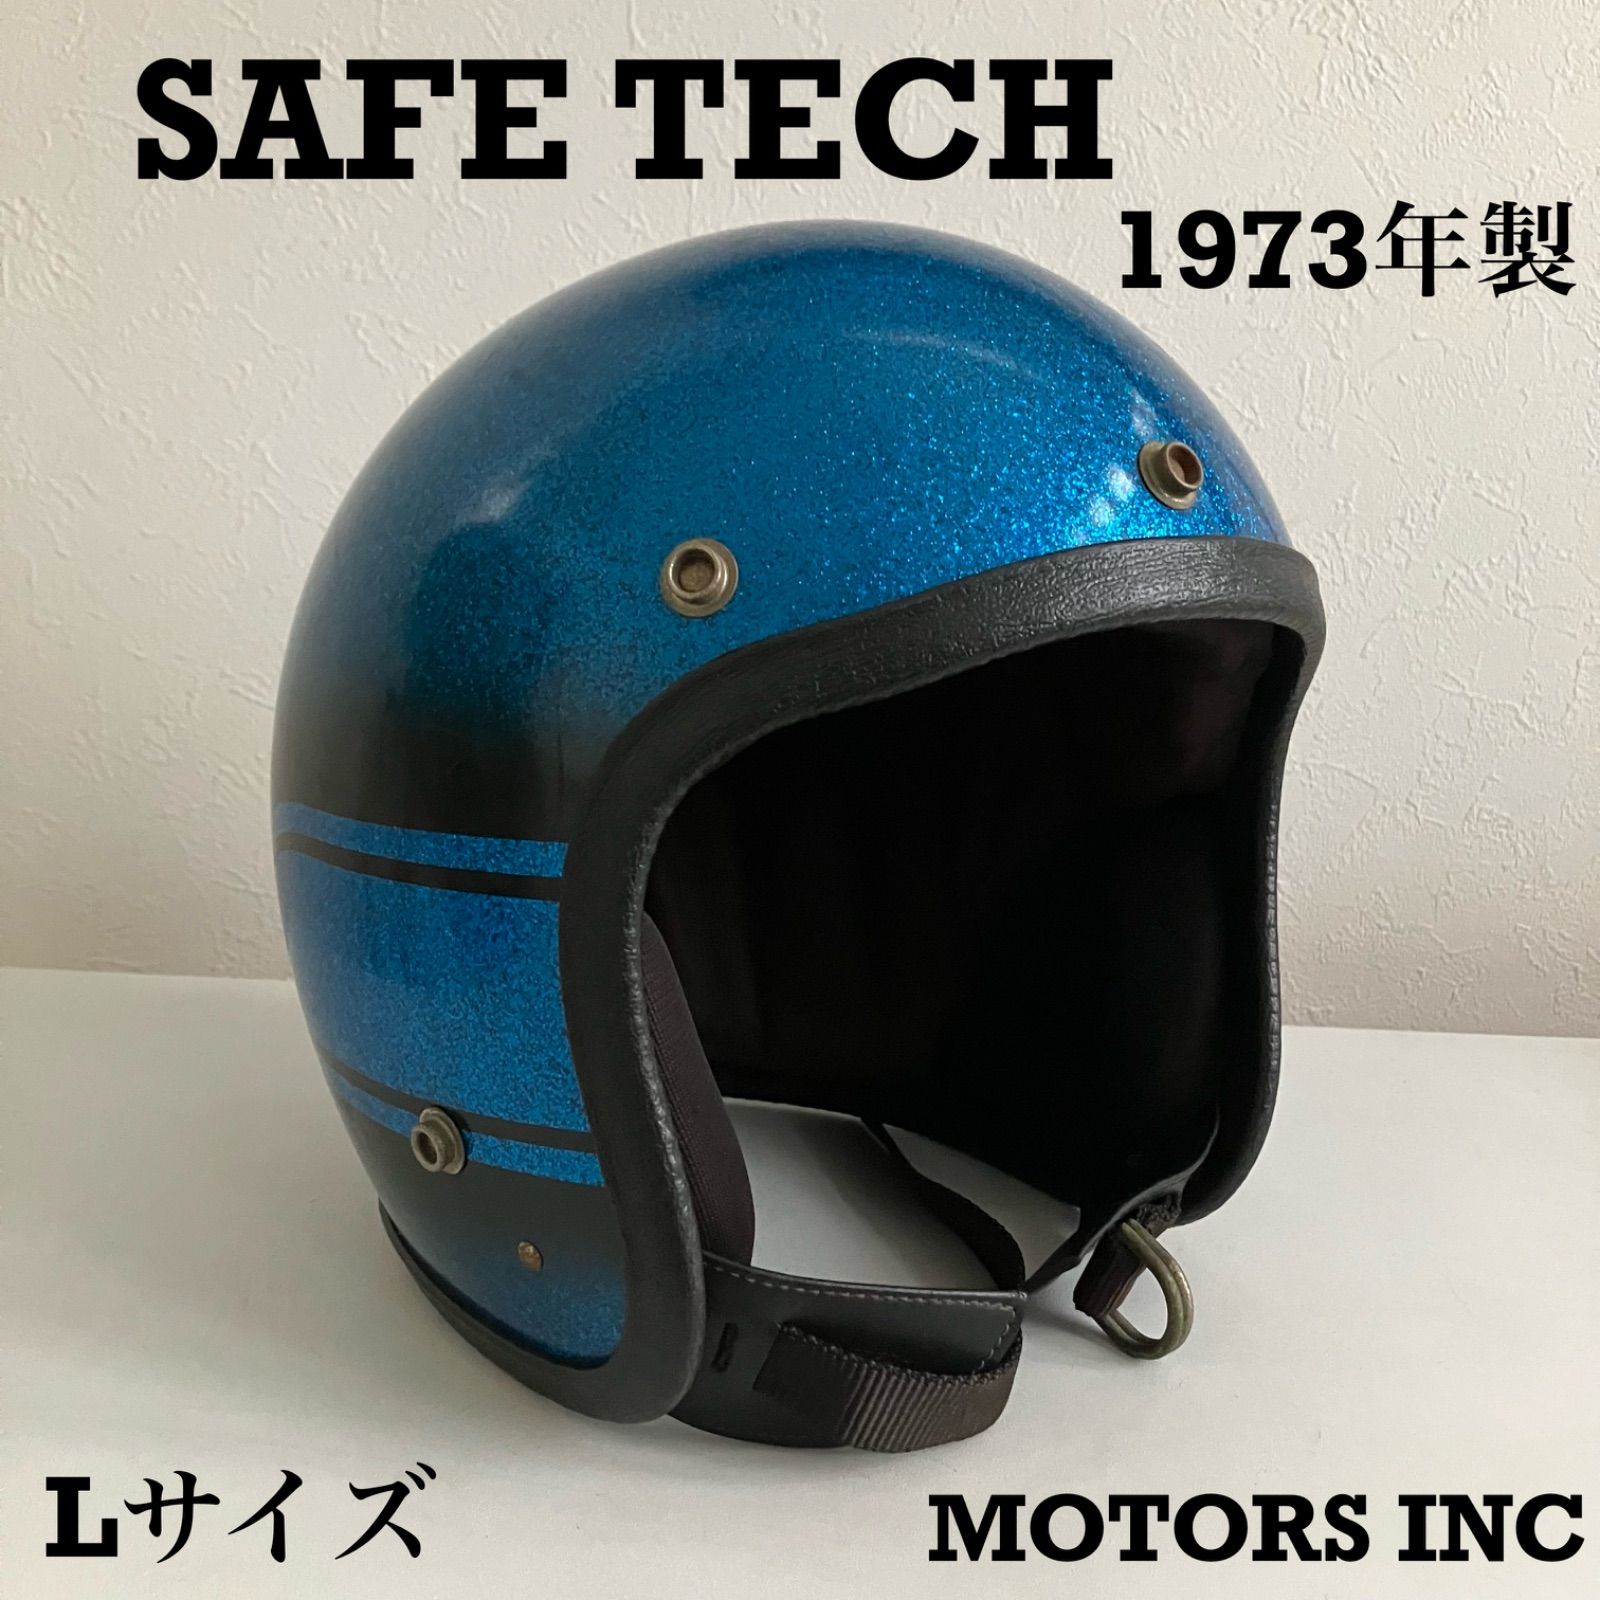 Safetechヴィンテージヘルメット